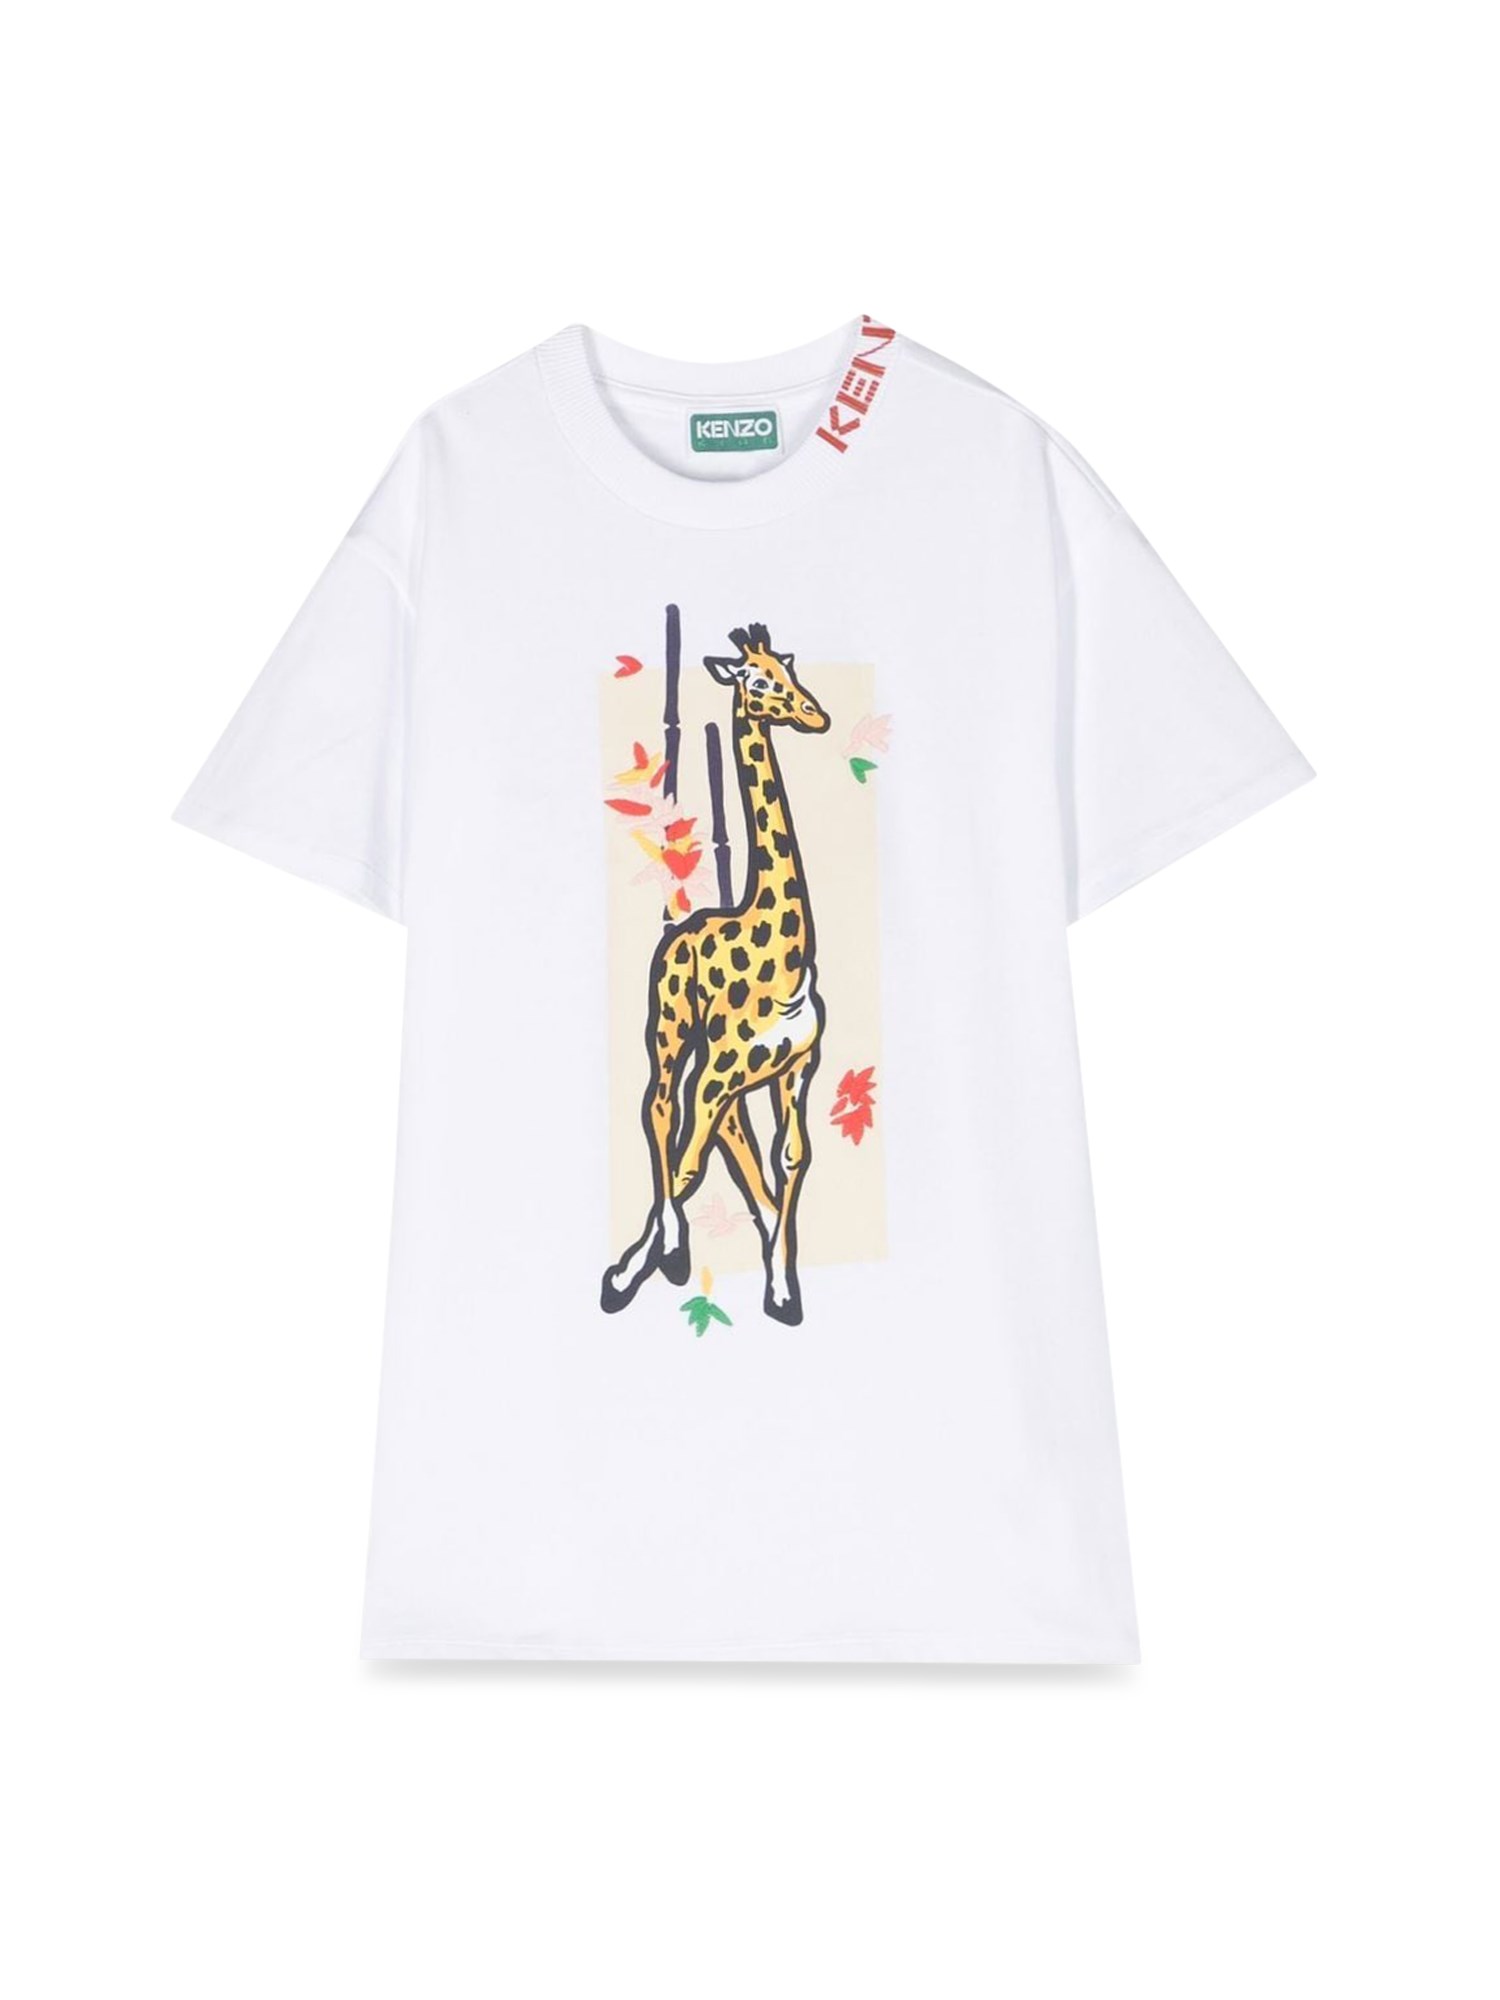 kenzo giraffe t-shirt dress